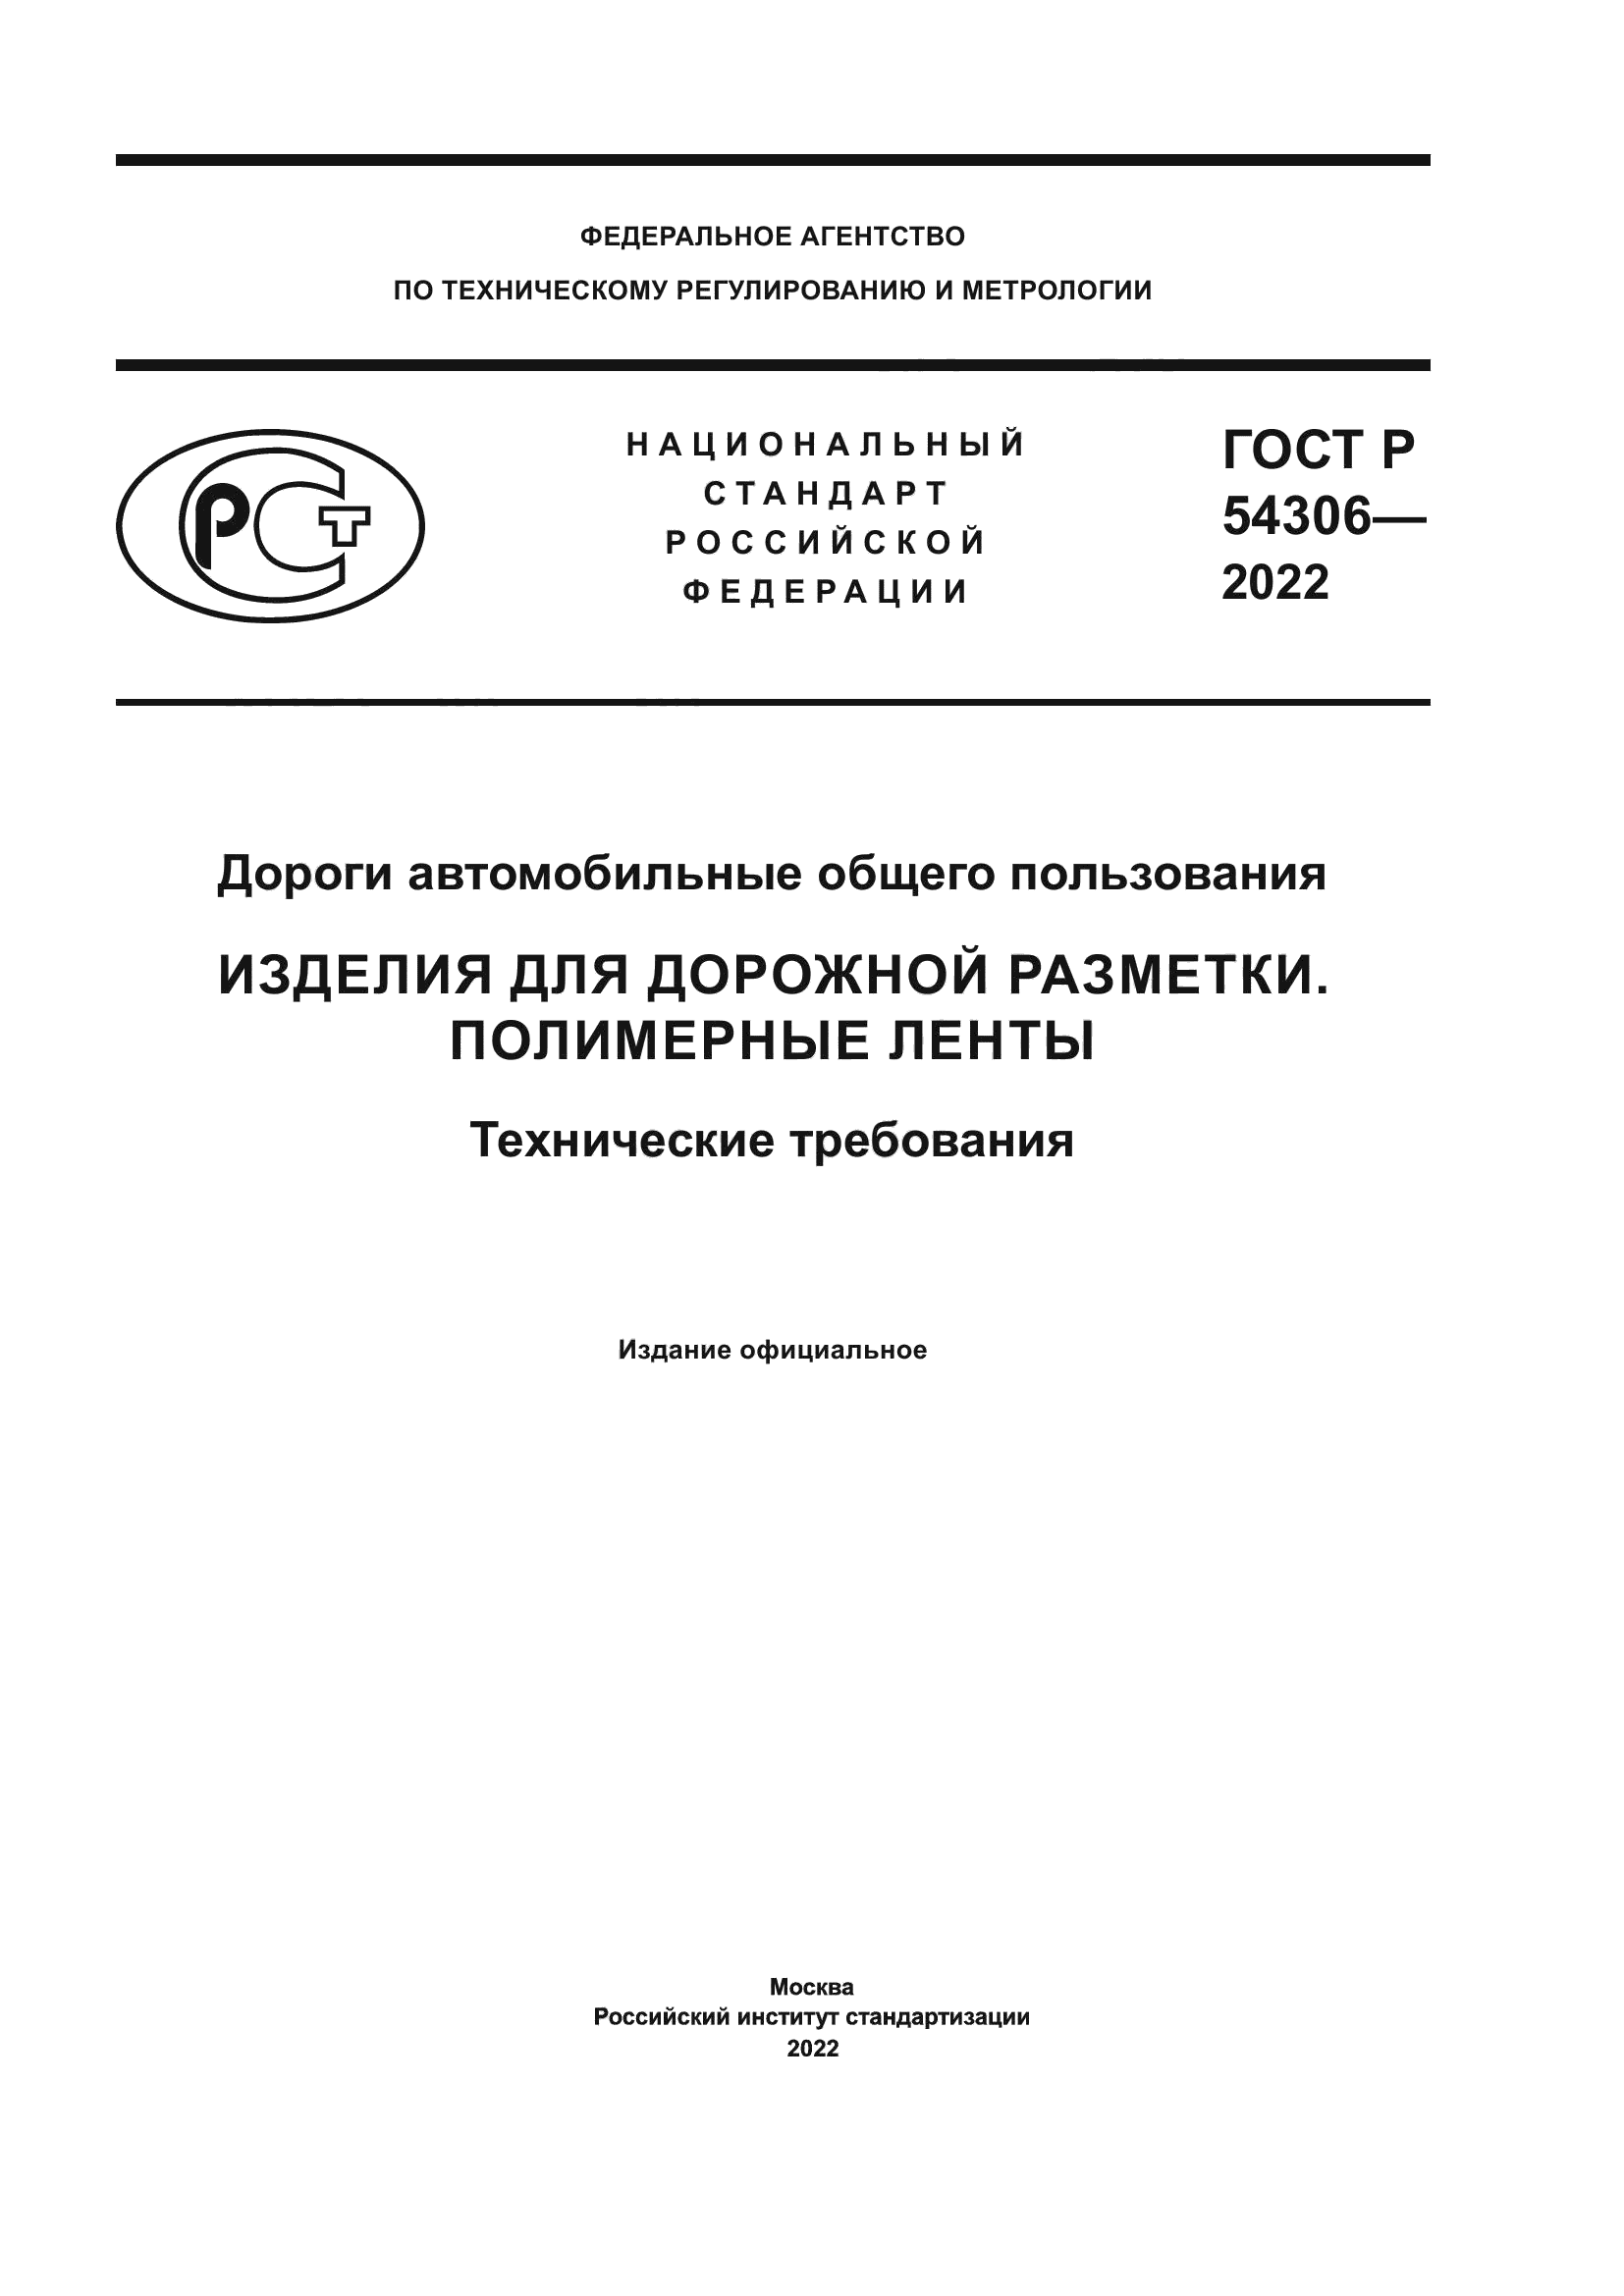 ГОСТ Р 54306-2022